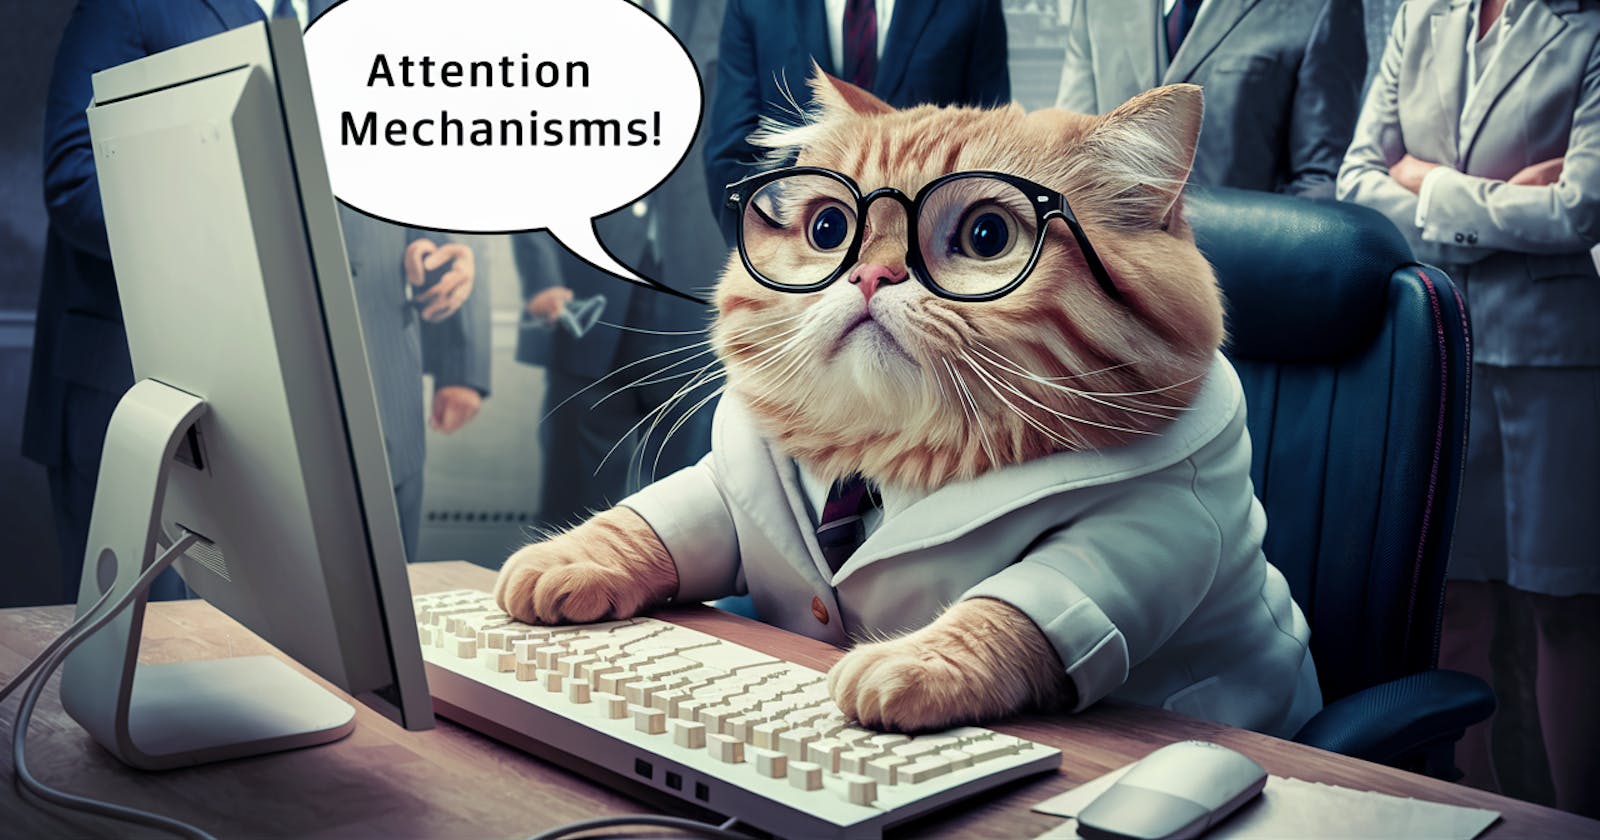 Attention Mechanisms